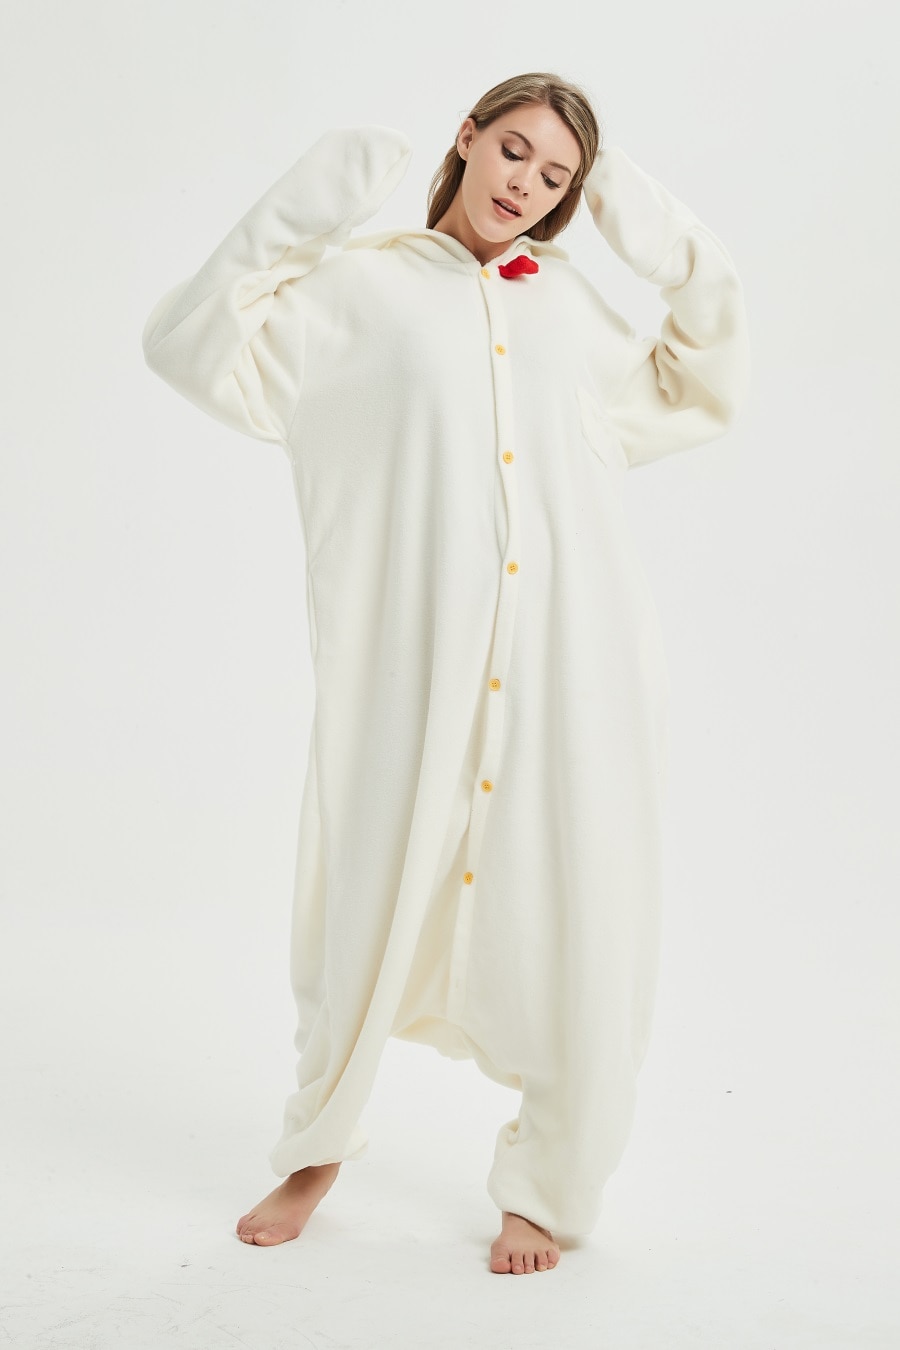 Unisex Cock Onesies Women Animal Kigurumis White Cute Funny Overalls Adult Festival GIft Halloween Suit Winter Pajama Loose